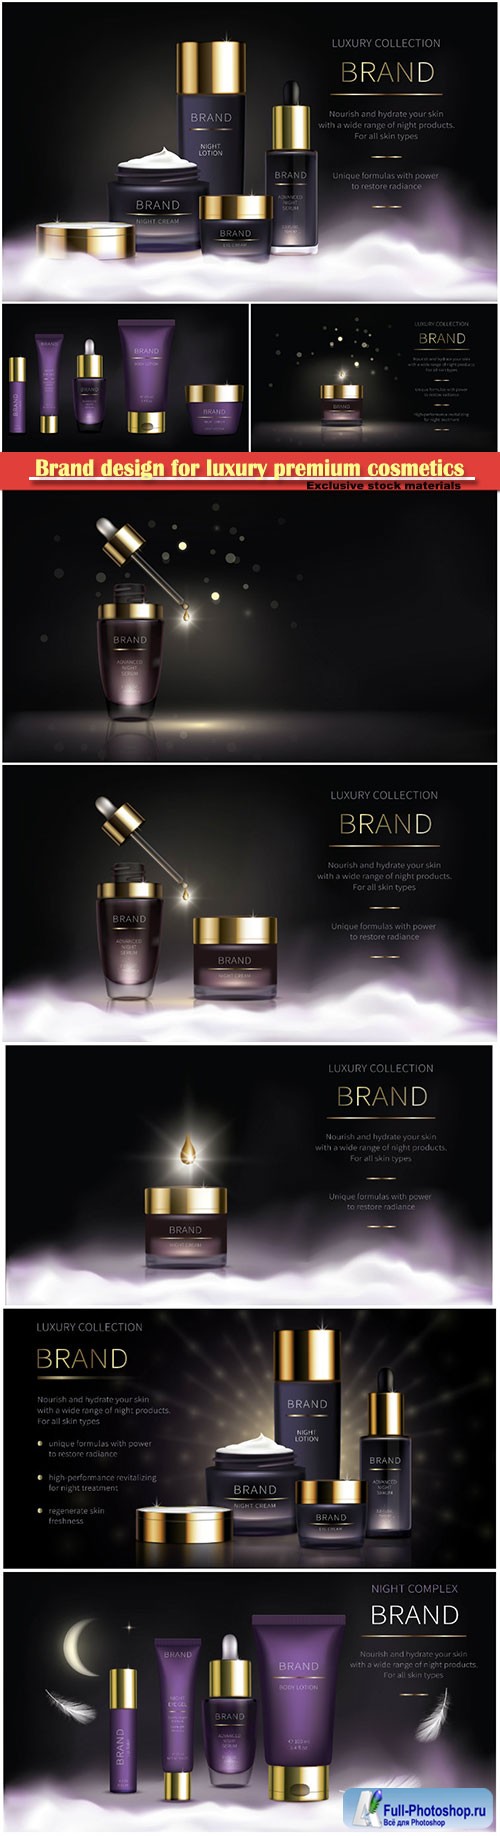 Brand design for luxury premium cosmetics, series for face skin care, realistic vector